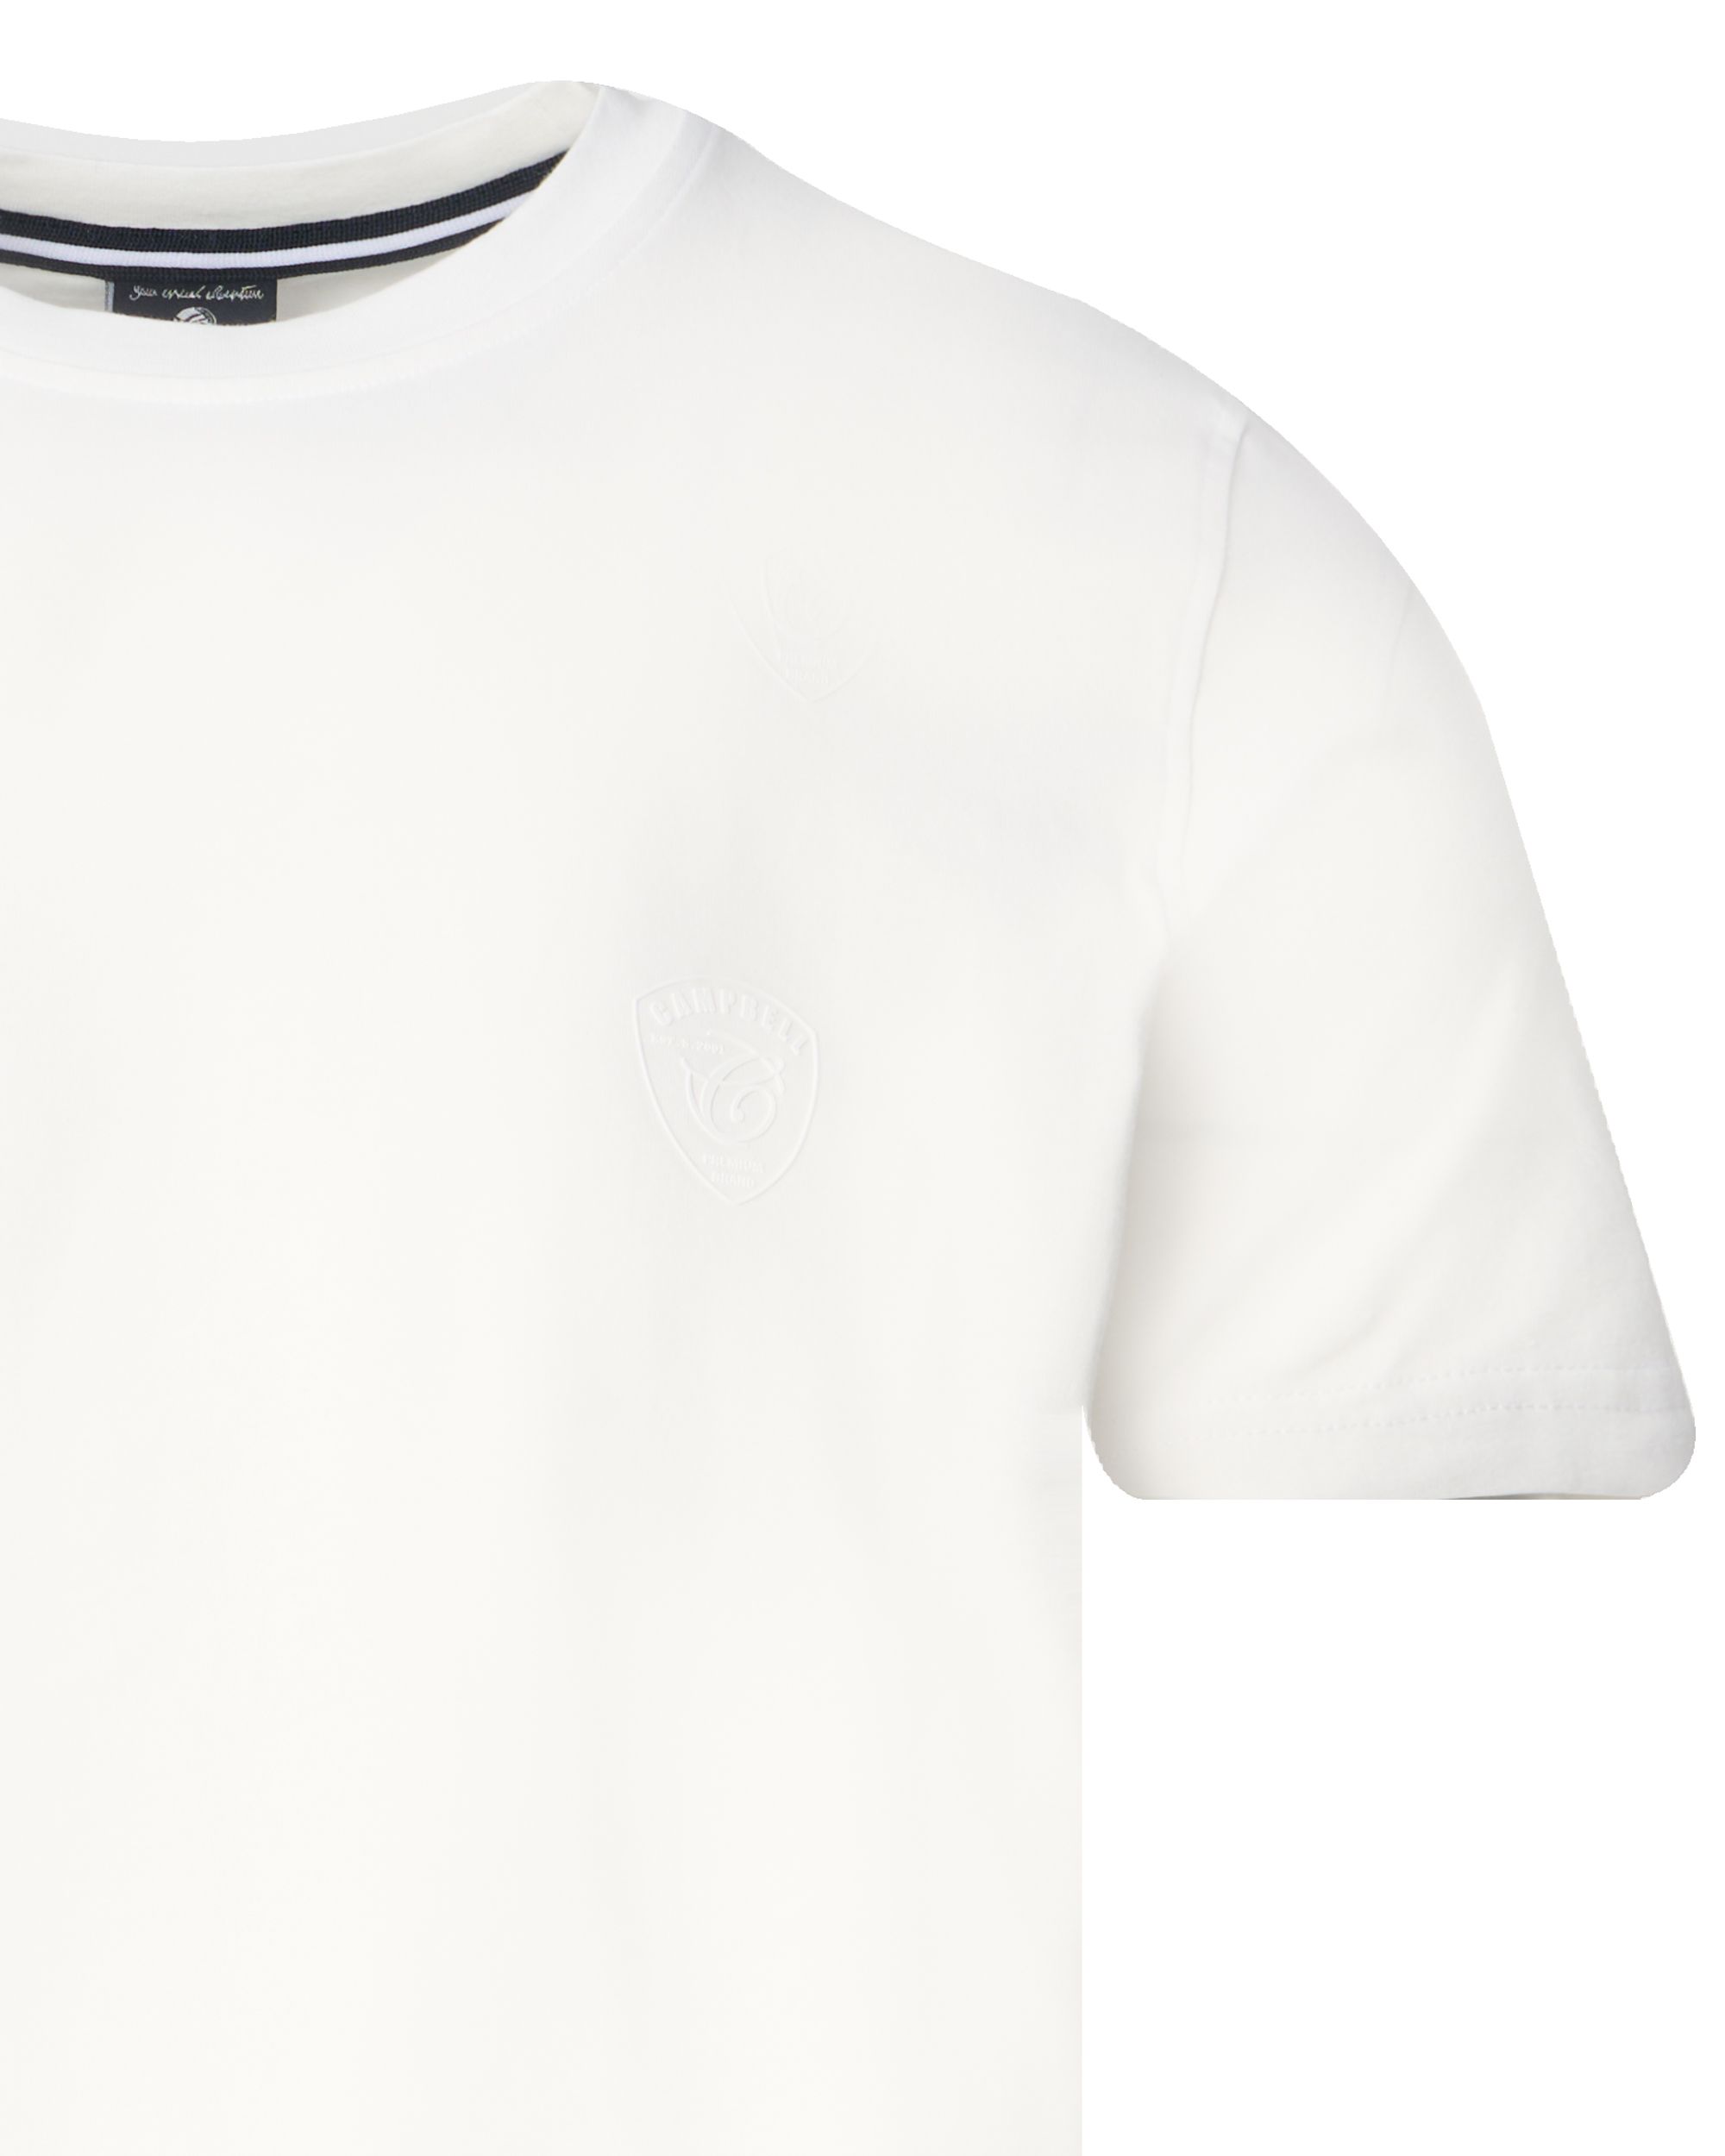 Campbell Classic Soho T-shirt KM Snow White 081503-009-L